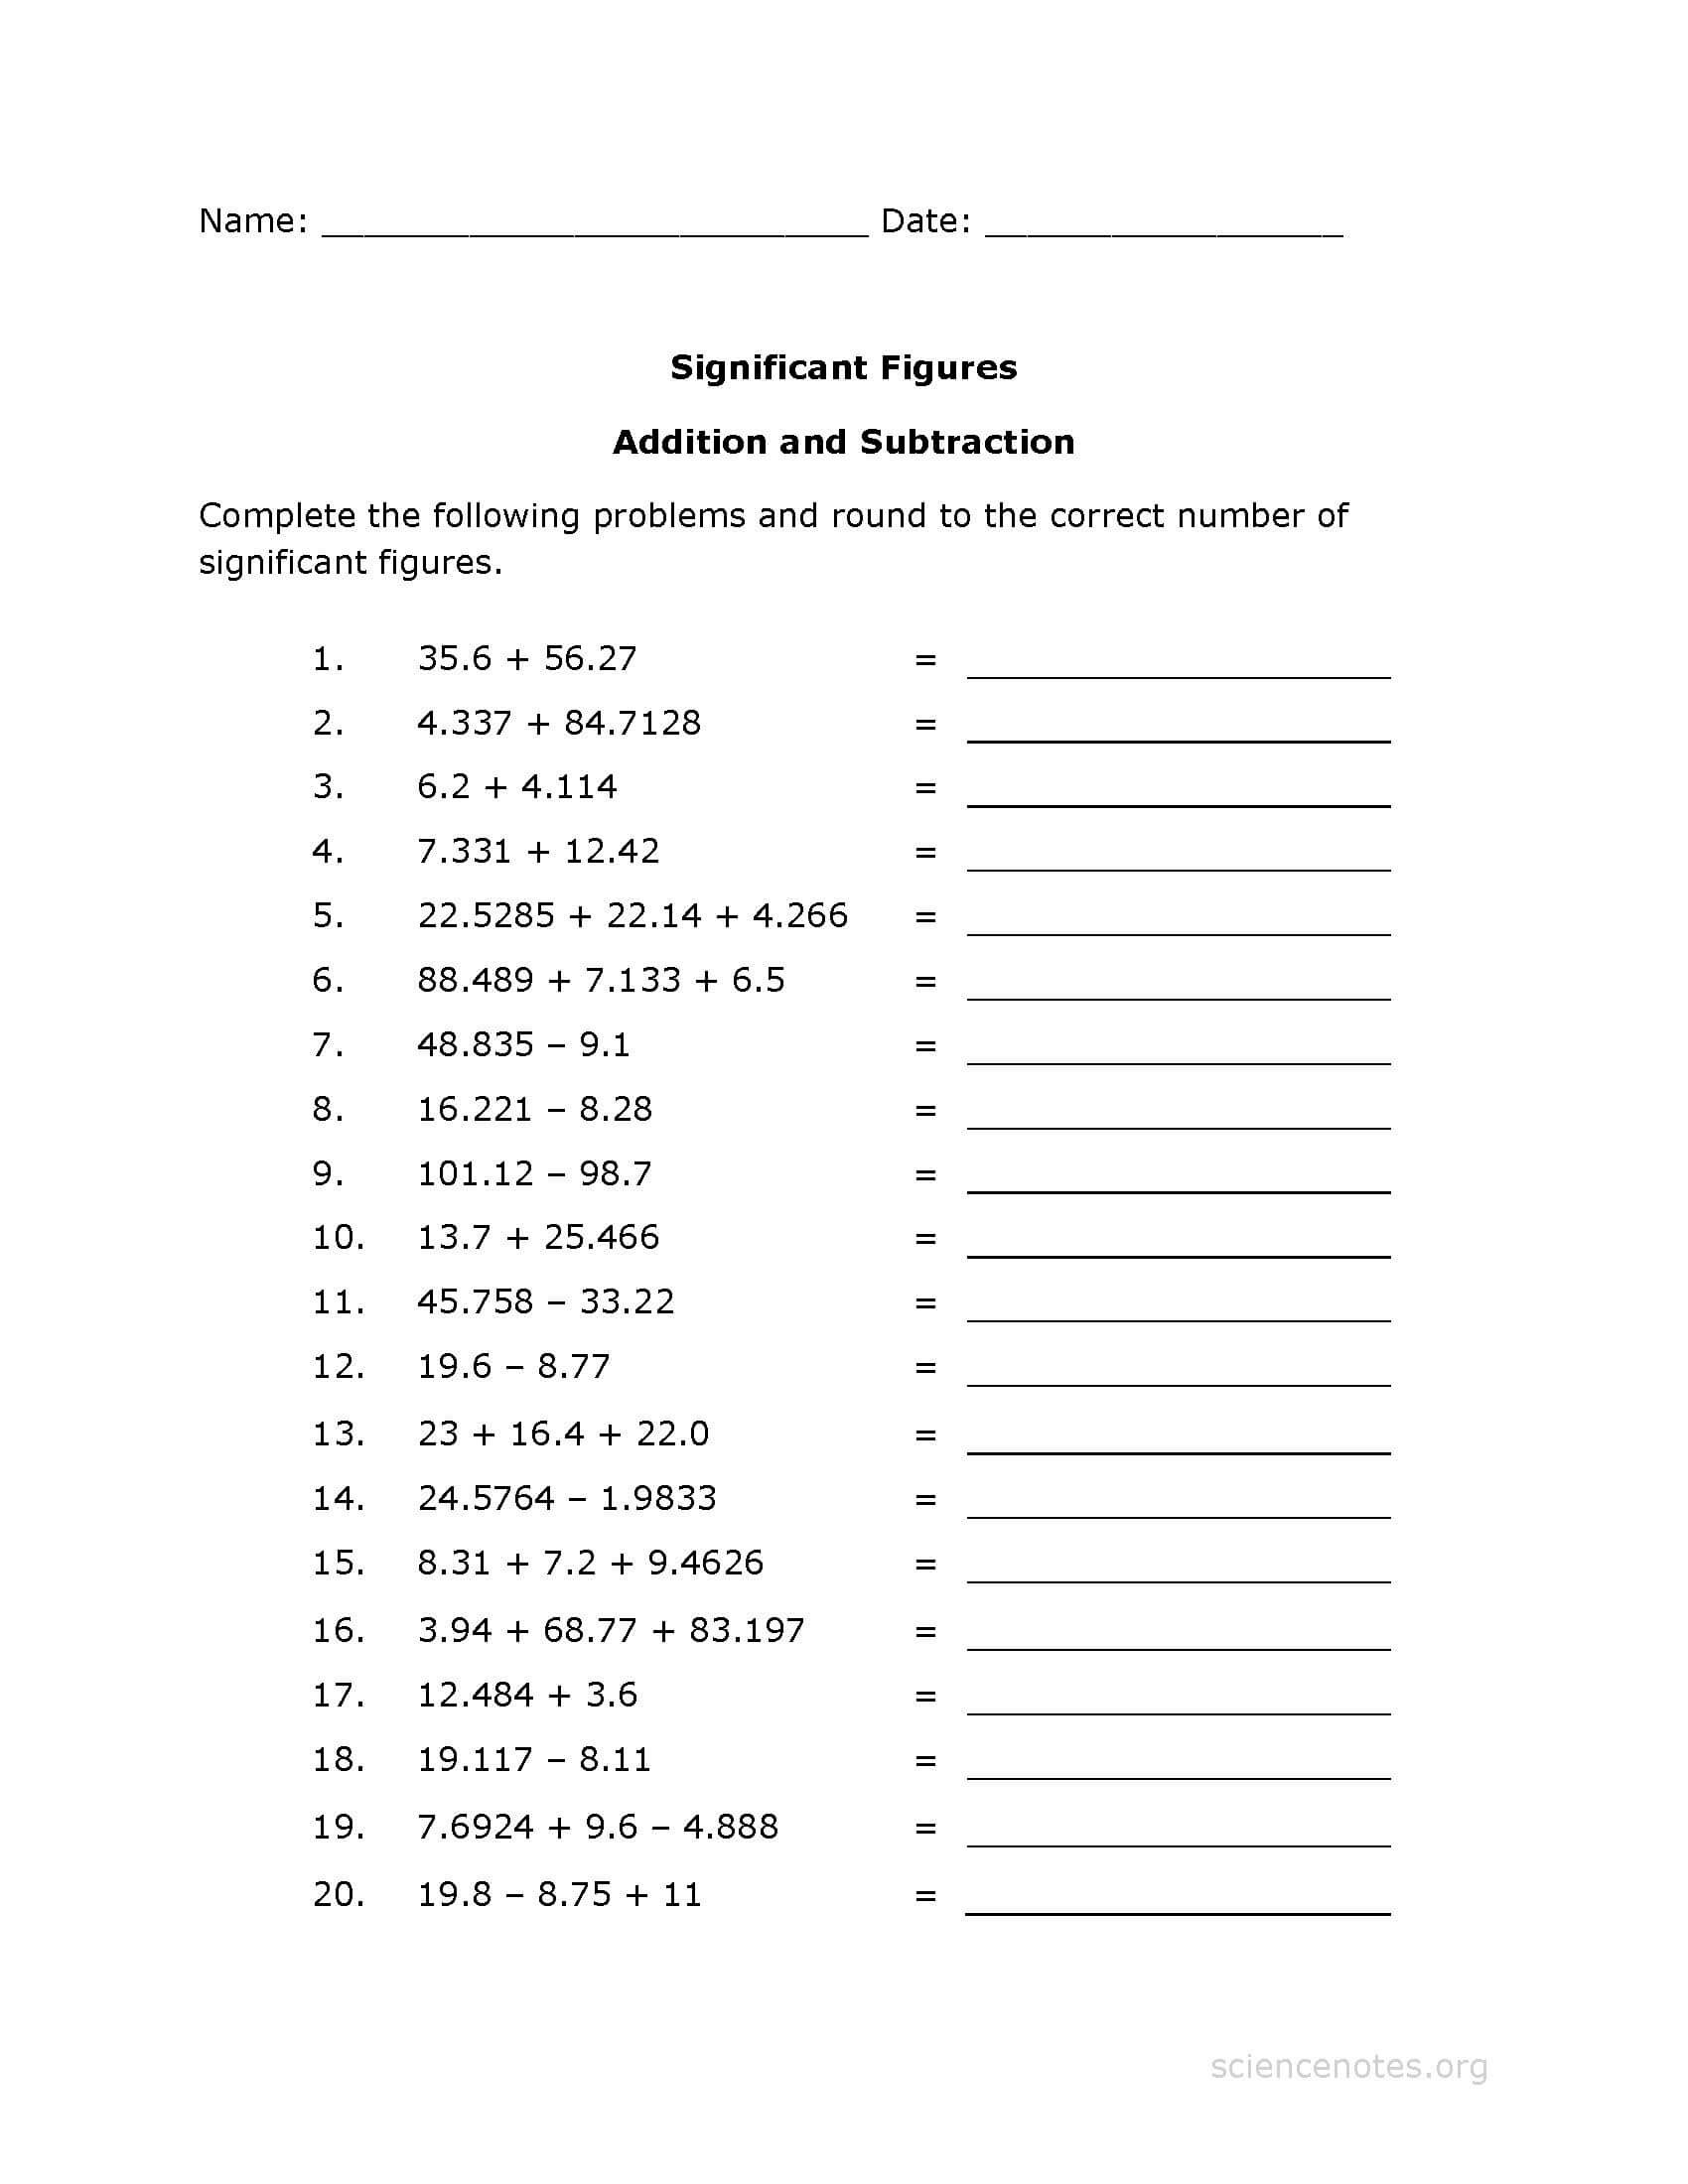 Significant Figures Worksheet Pdf  Addition Practice For Significant Figures Worksheet Chemistry